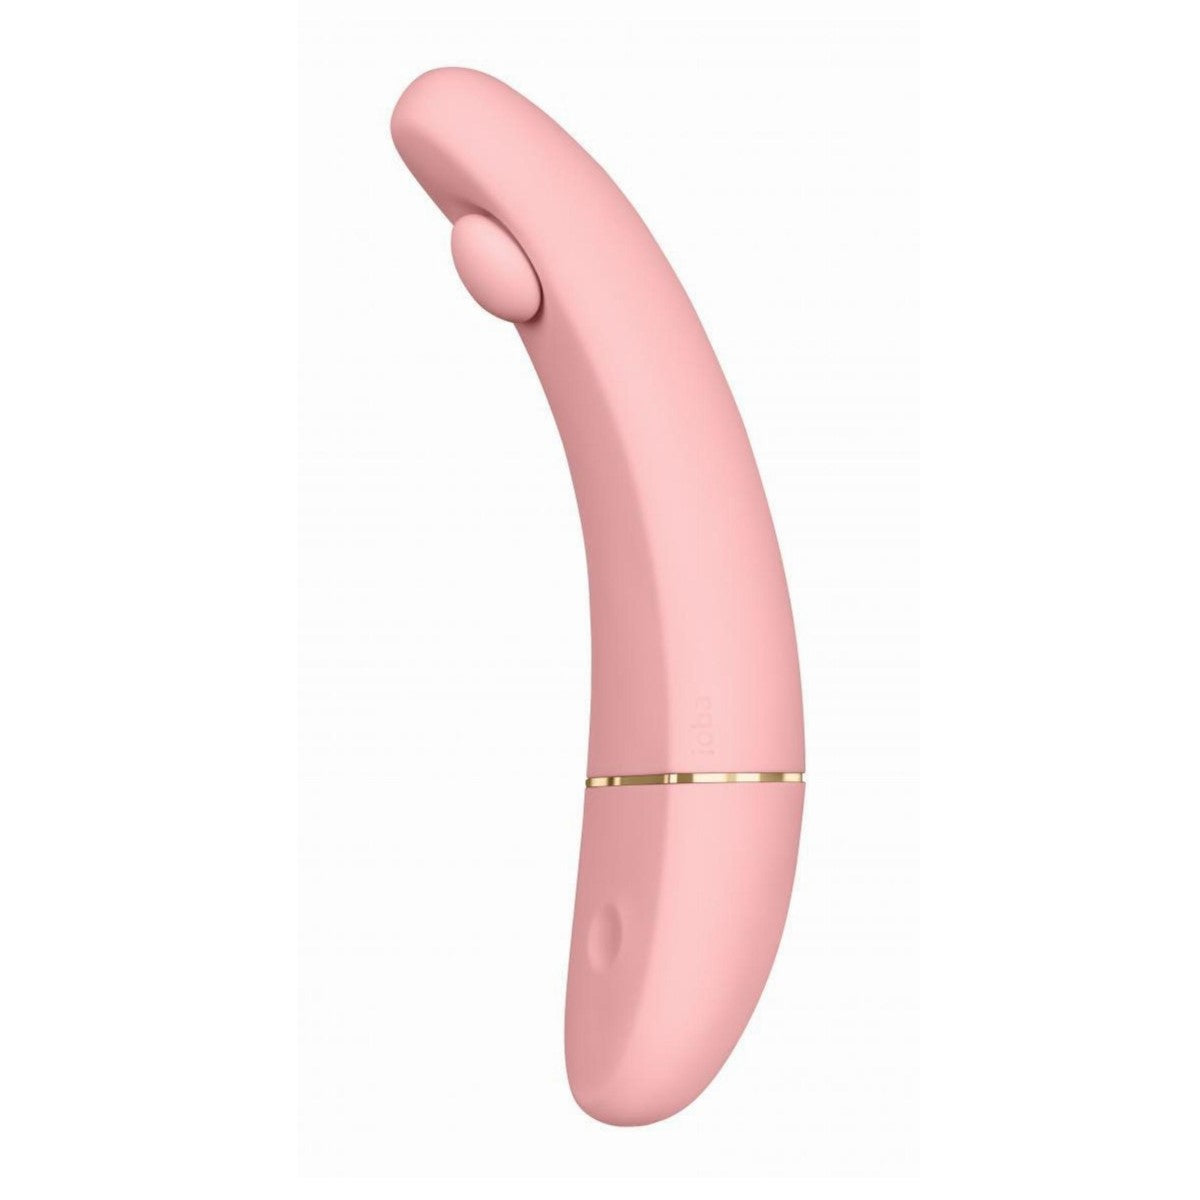 loba - OhMyG - G-Punkt-Vibrator - Pink